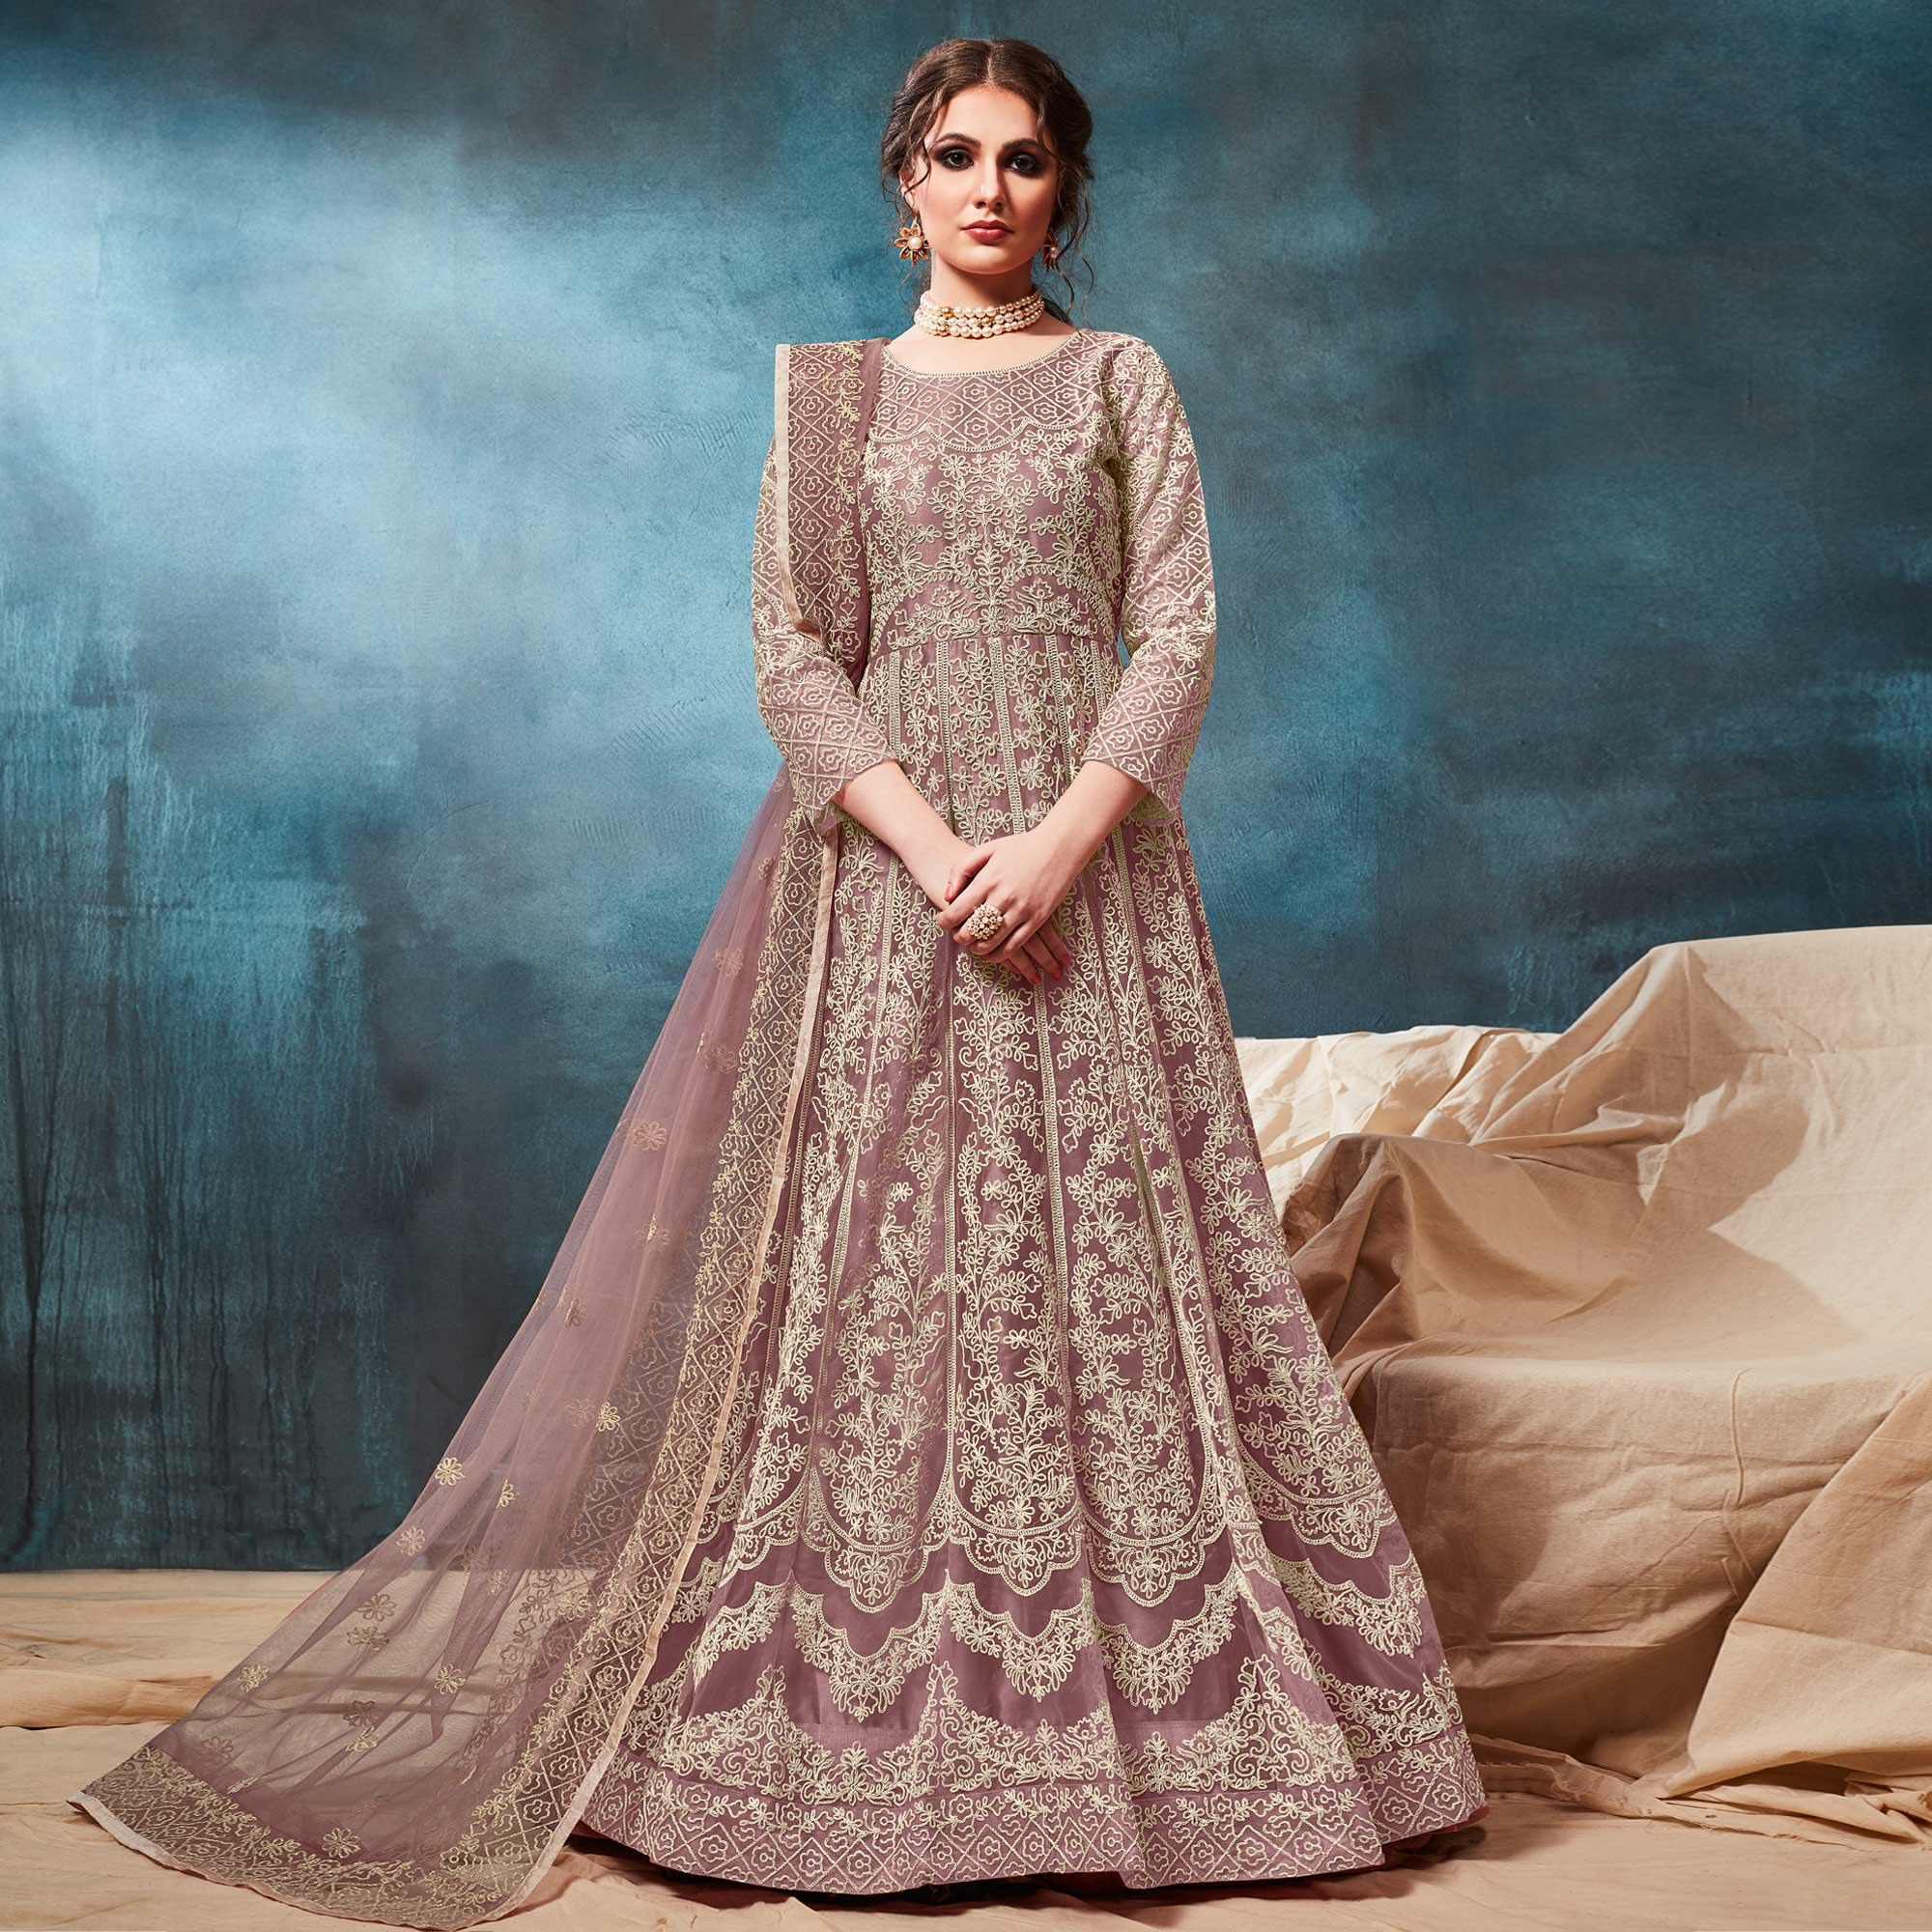 Black Stitch Designer Party Wear Net Gown, Size: M-xxl at Rs 850 in Jaipur